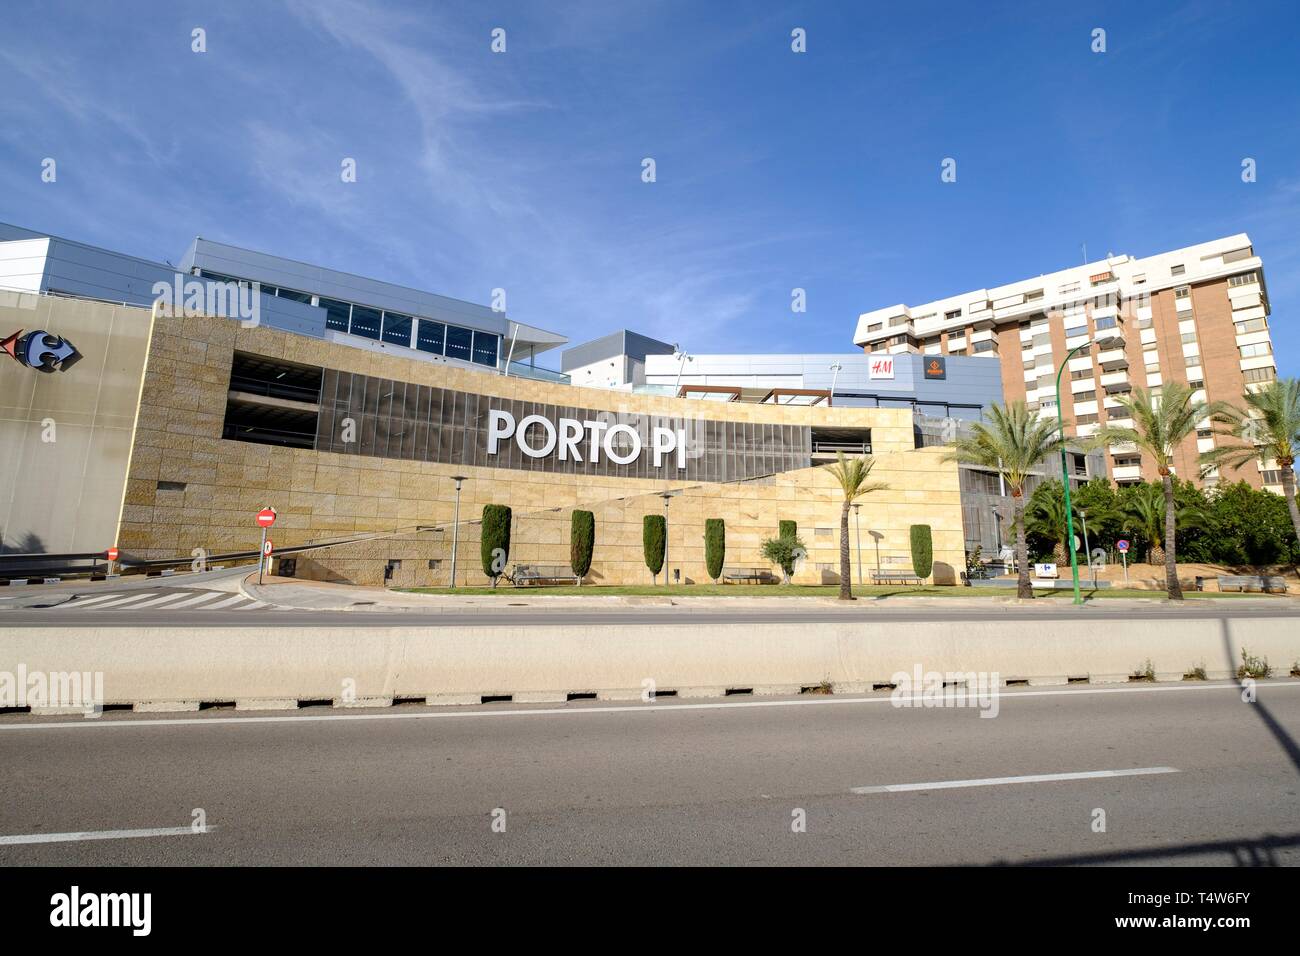 centro comercial Porto Pi, Palma, Mallorca, balearic islands, spain, europe  Stock Photo - Alamy